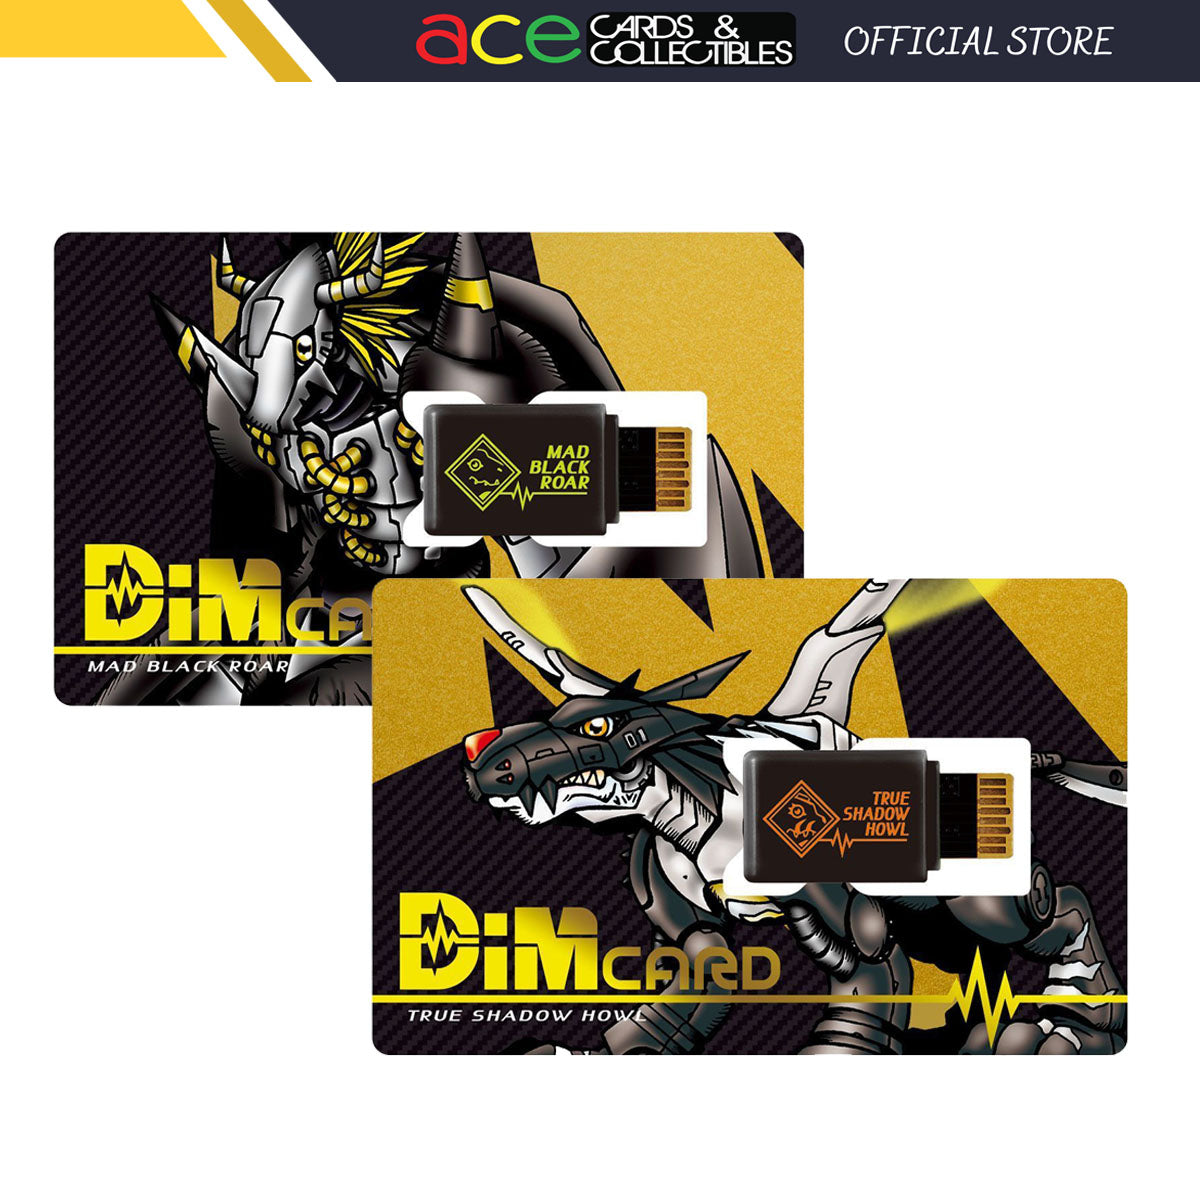 Digimon Vital Breath Digital Monster -Dim Card Set Vol. 0.5 Mad Black Roar & True Shadow Howl-Bandai-Ace Cards & Collectibles